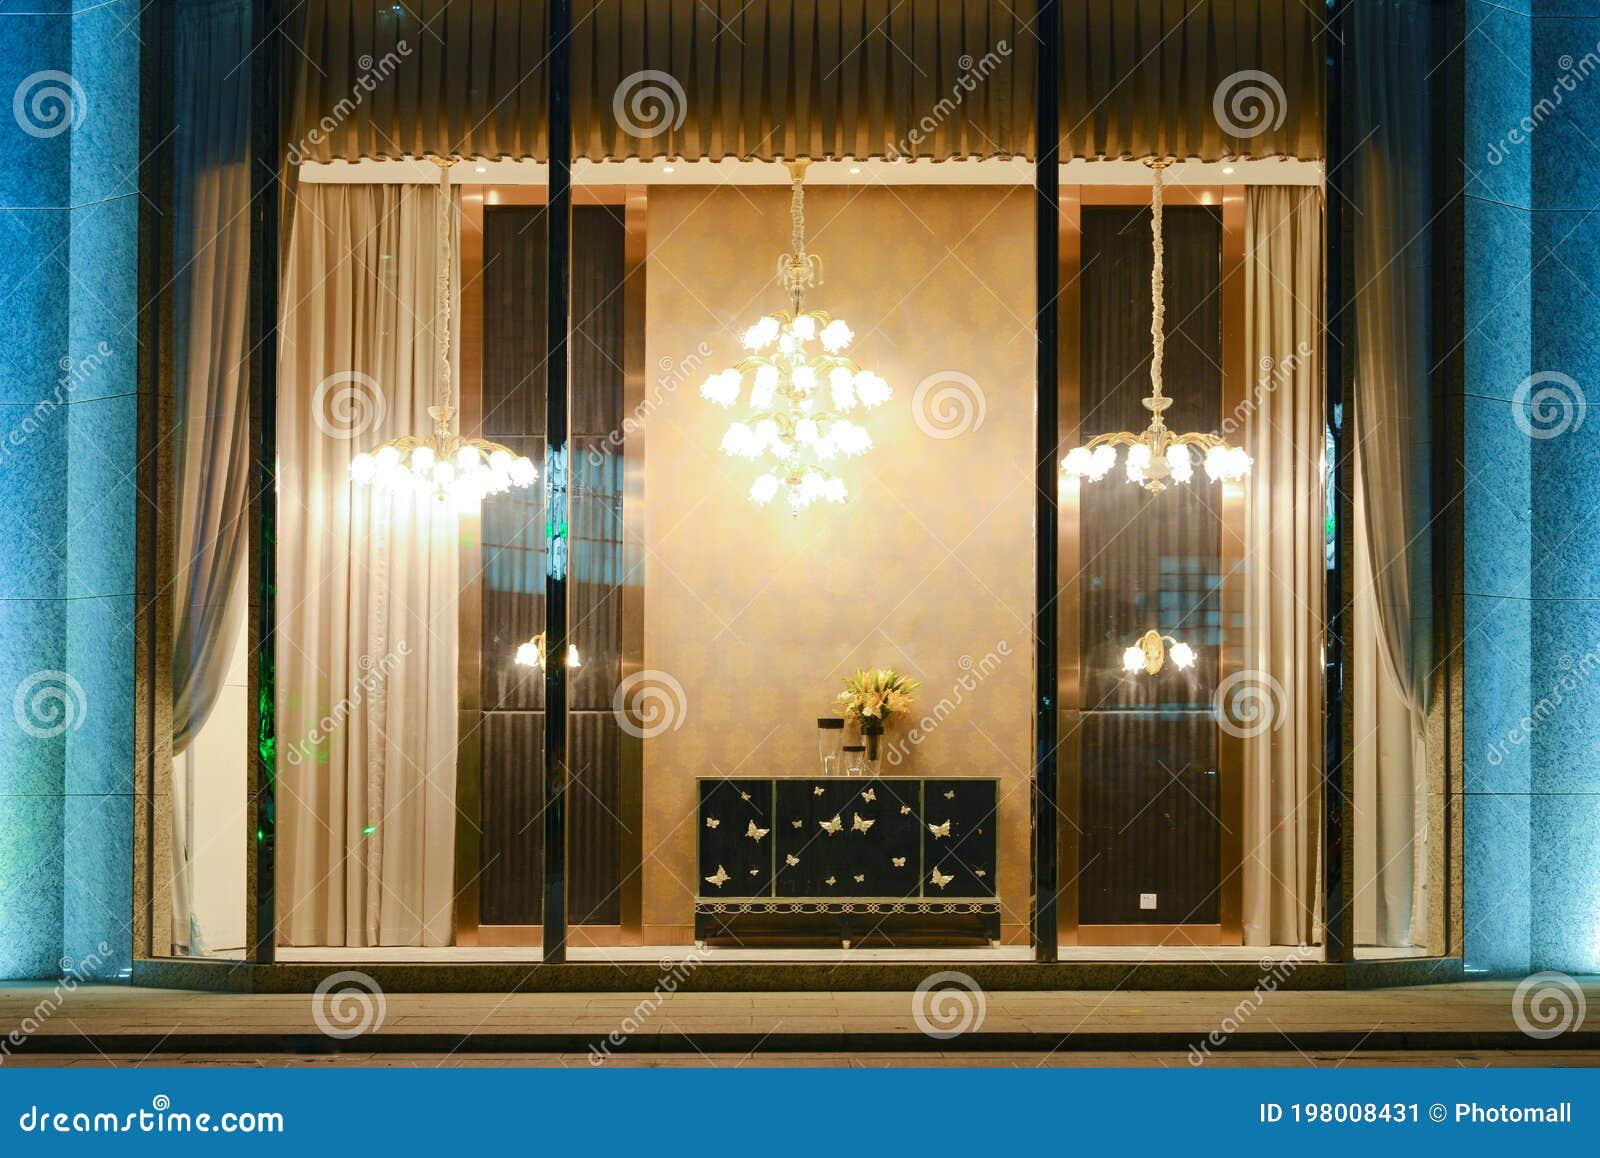 Illuminated Shopwindow In Retro Building Royalty-Free Stock Image ...